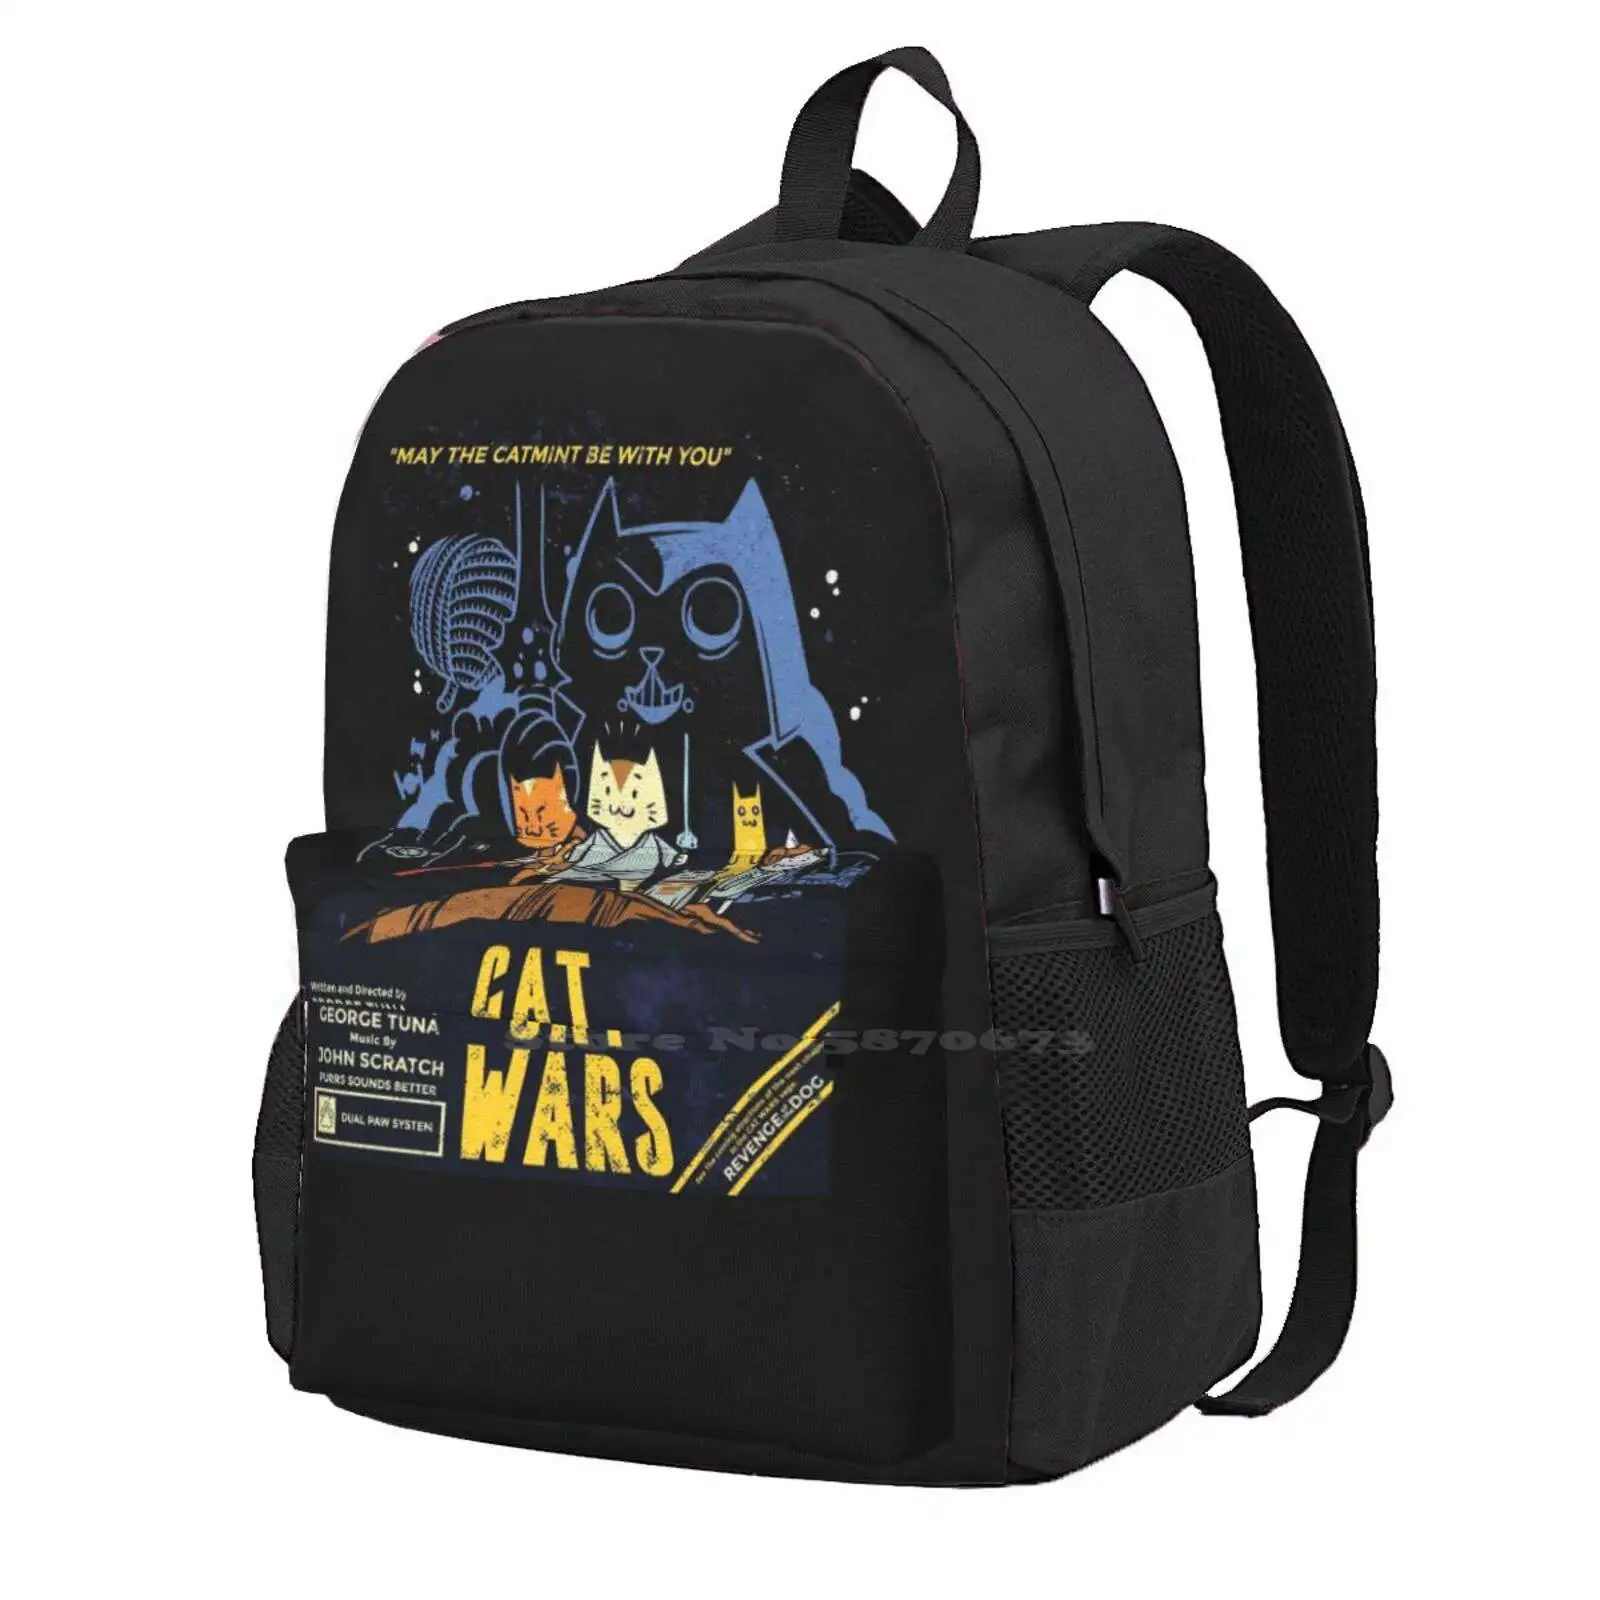 

Cat Wars-Cat Parody Travel Laptop Bagpack School Bags Cute Cats Funny Kitty Animals Kitten Space Light Saber Pets Tumblr Feline